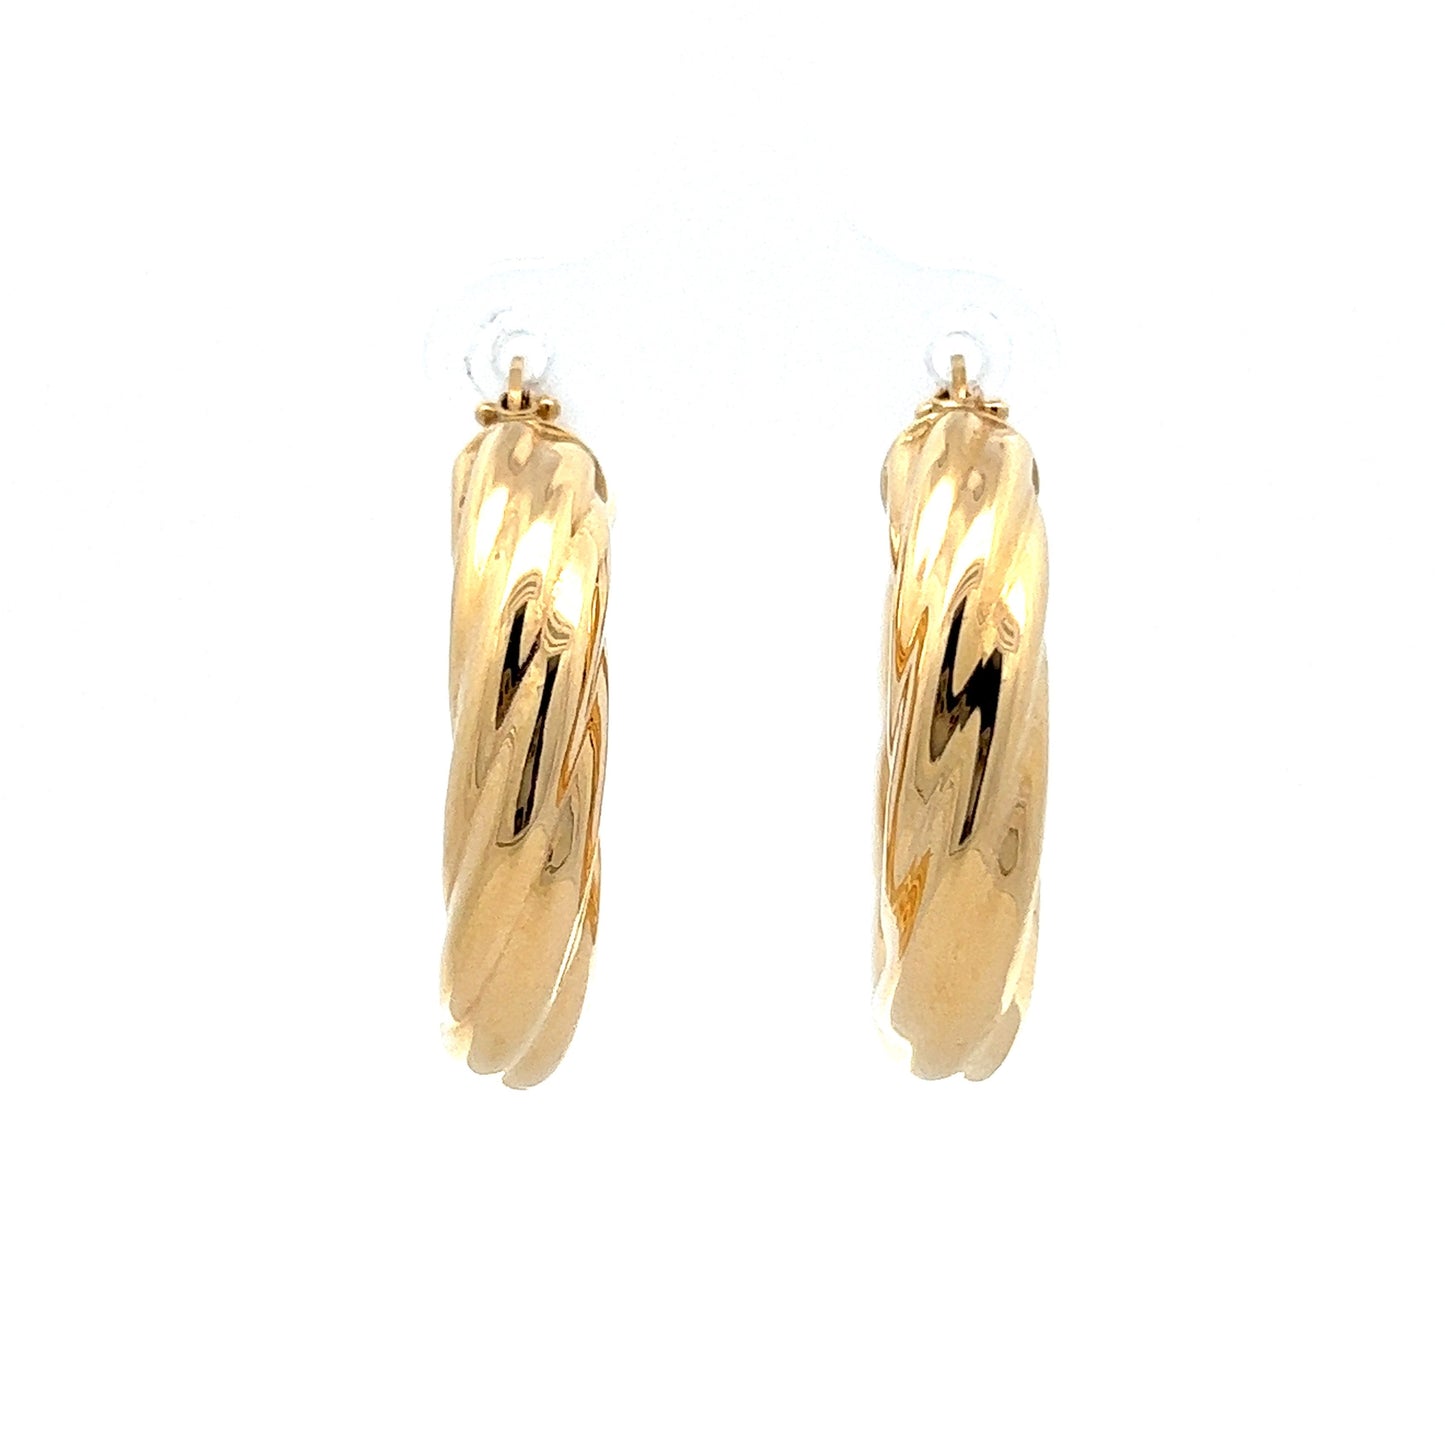 Chunky Twisted Hoop Earrings in 14k Yellow Gold